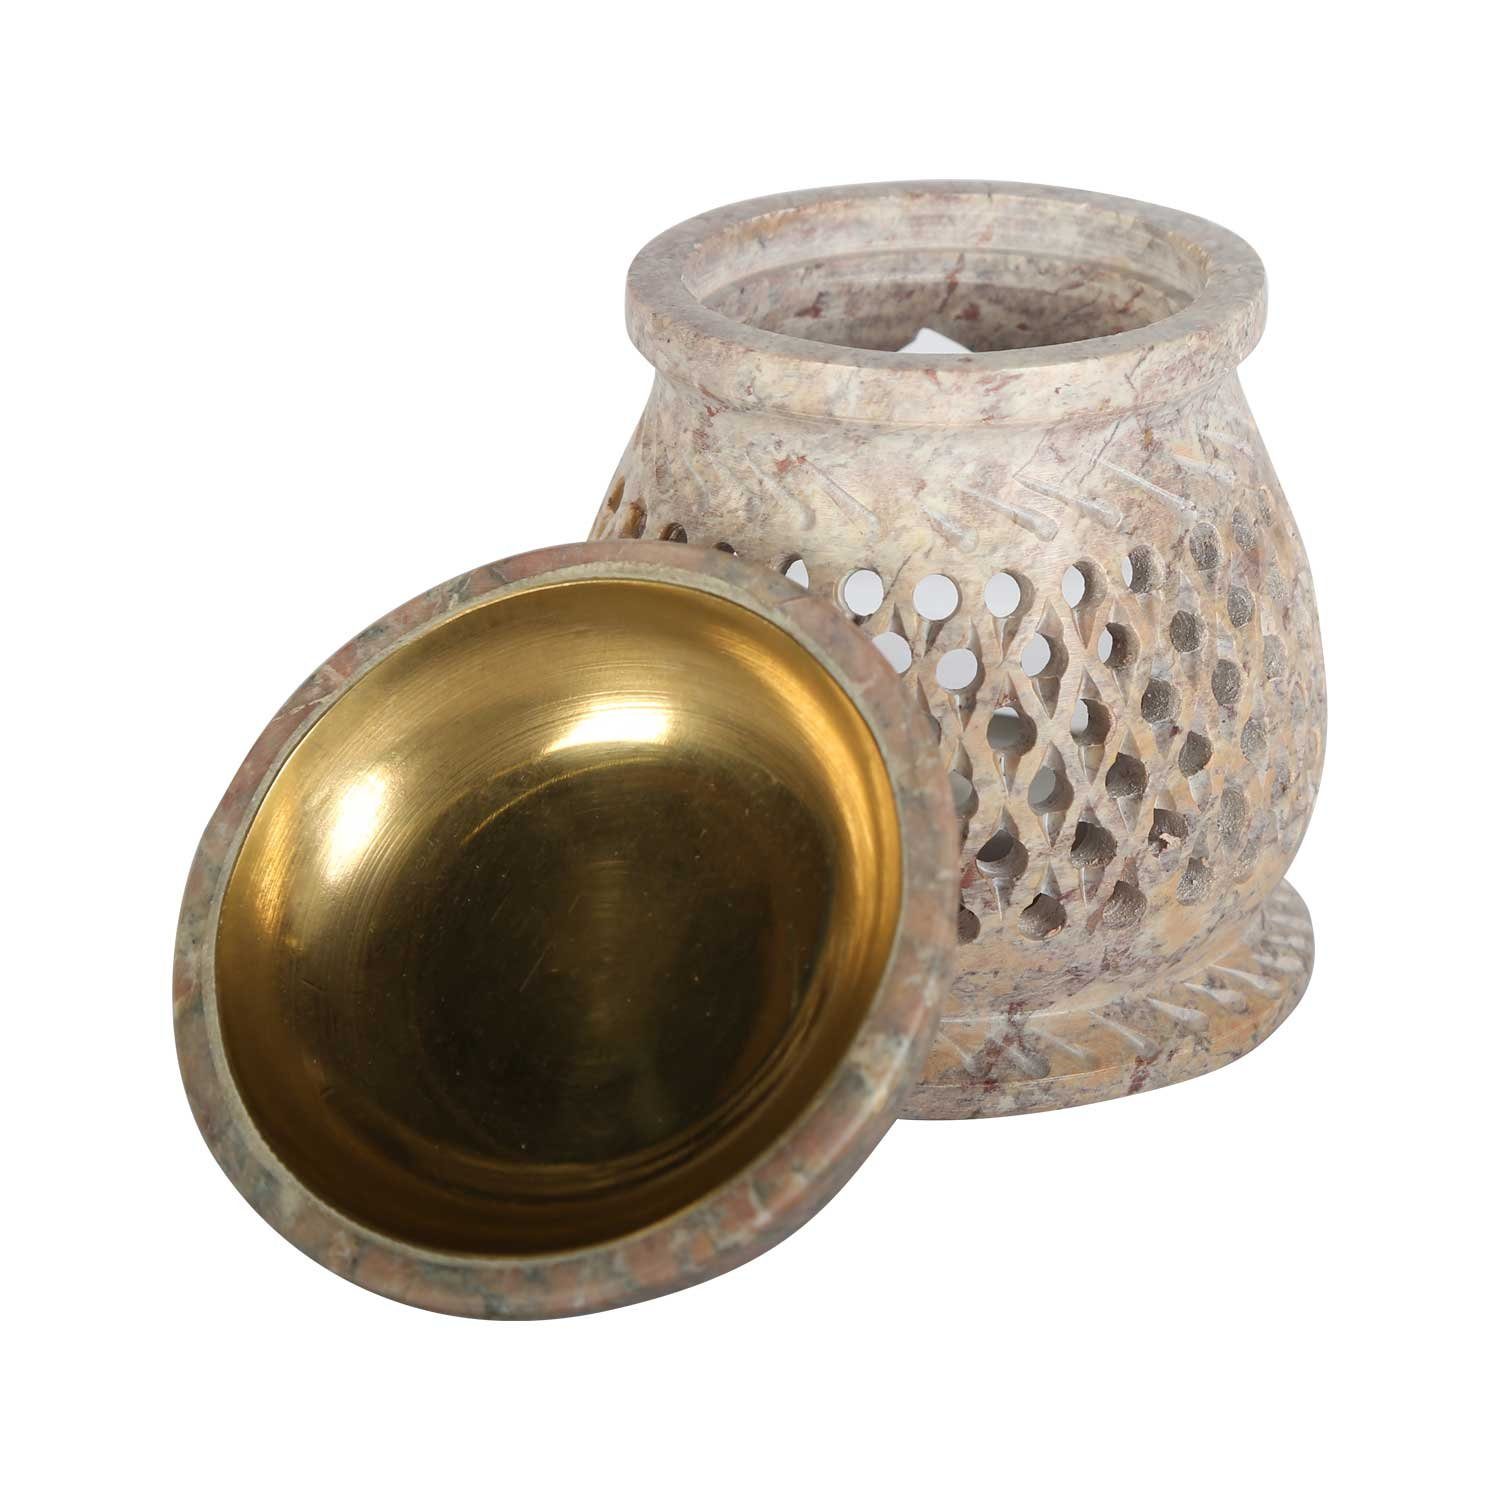 Orientalische aus Moro Bunt Casa Duftlampe Soapstone handgeschnitzt Teelicht, Duftlampe Diffusor Namaste